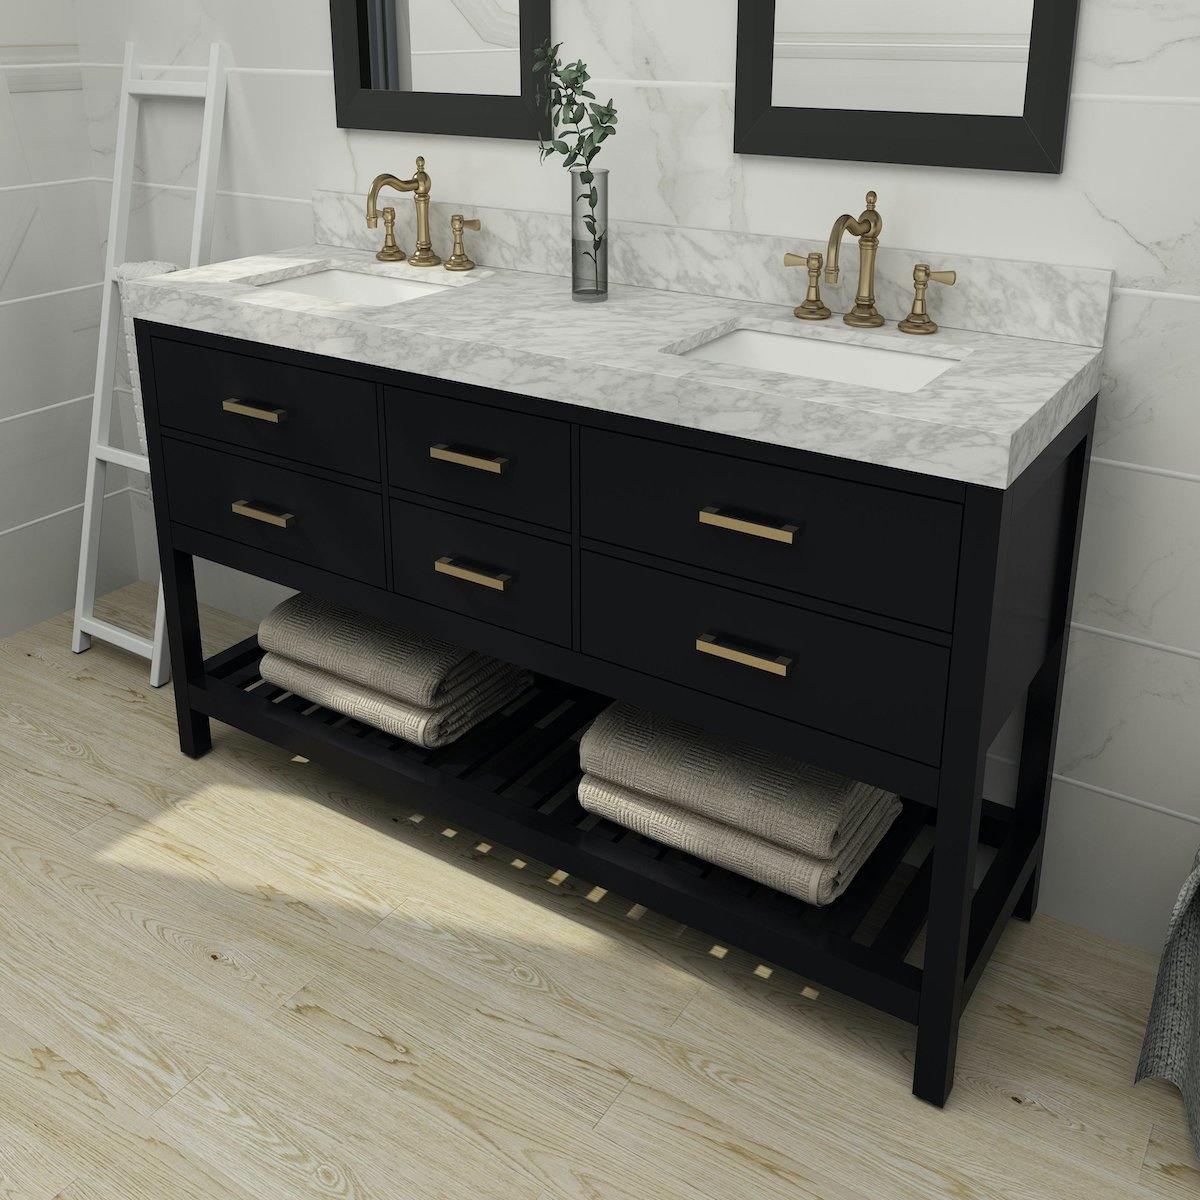 Ancerre Designs Elizabeth 72 Inch Onyx Black Double Vanity in Bathroom